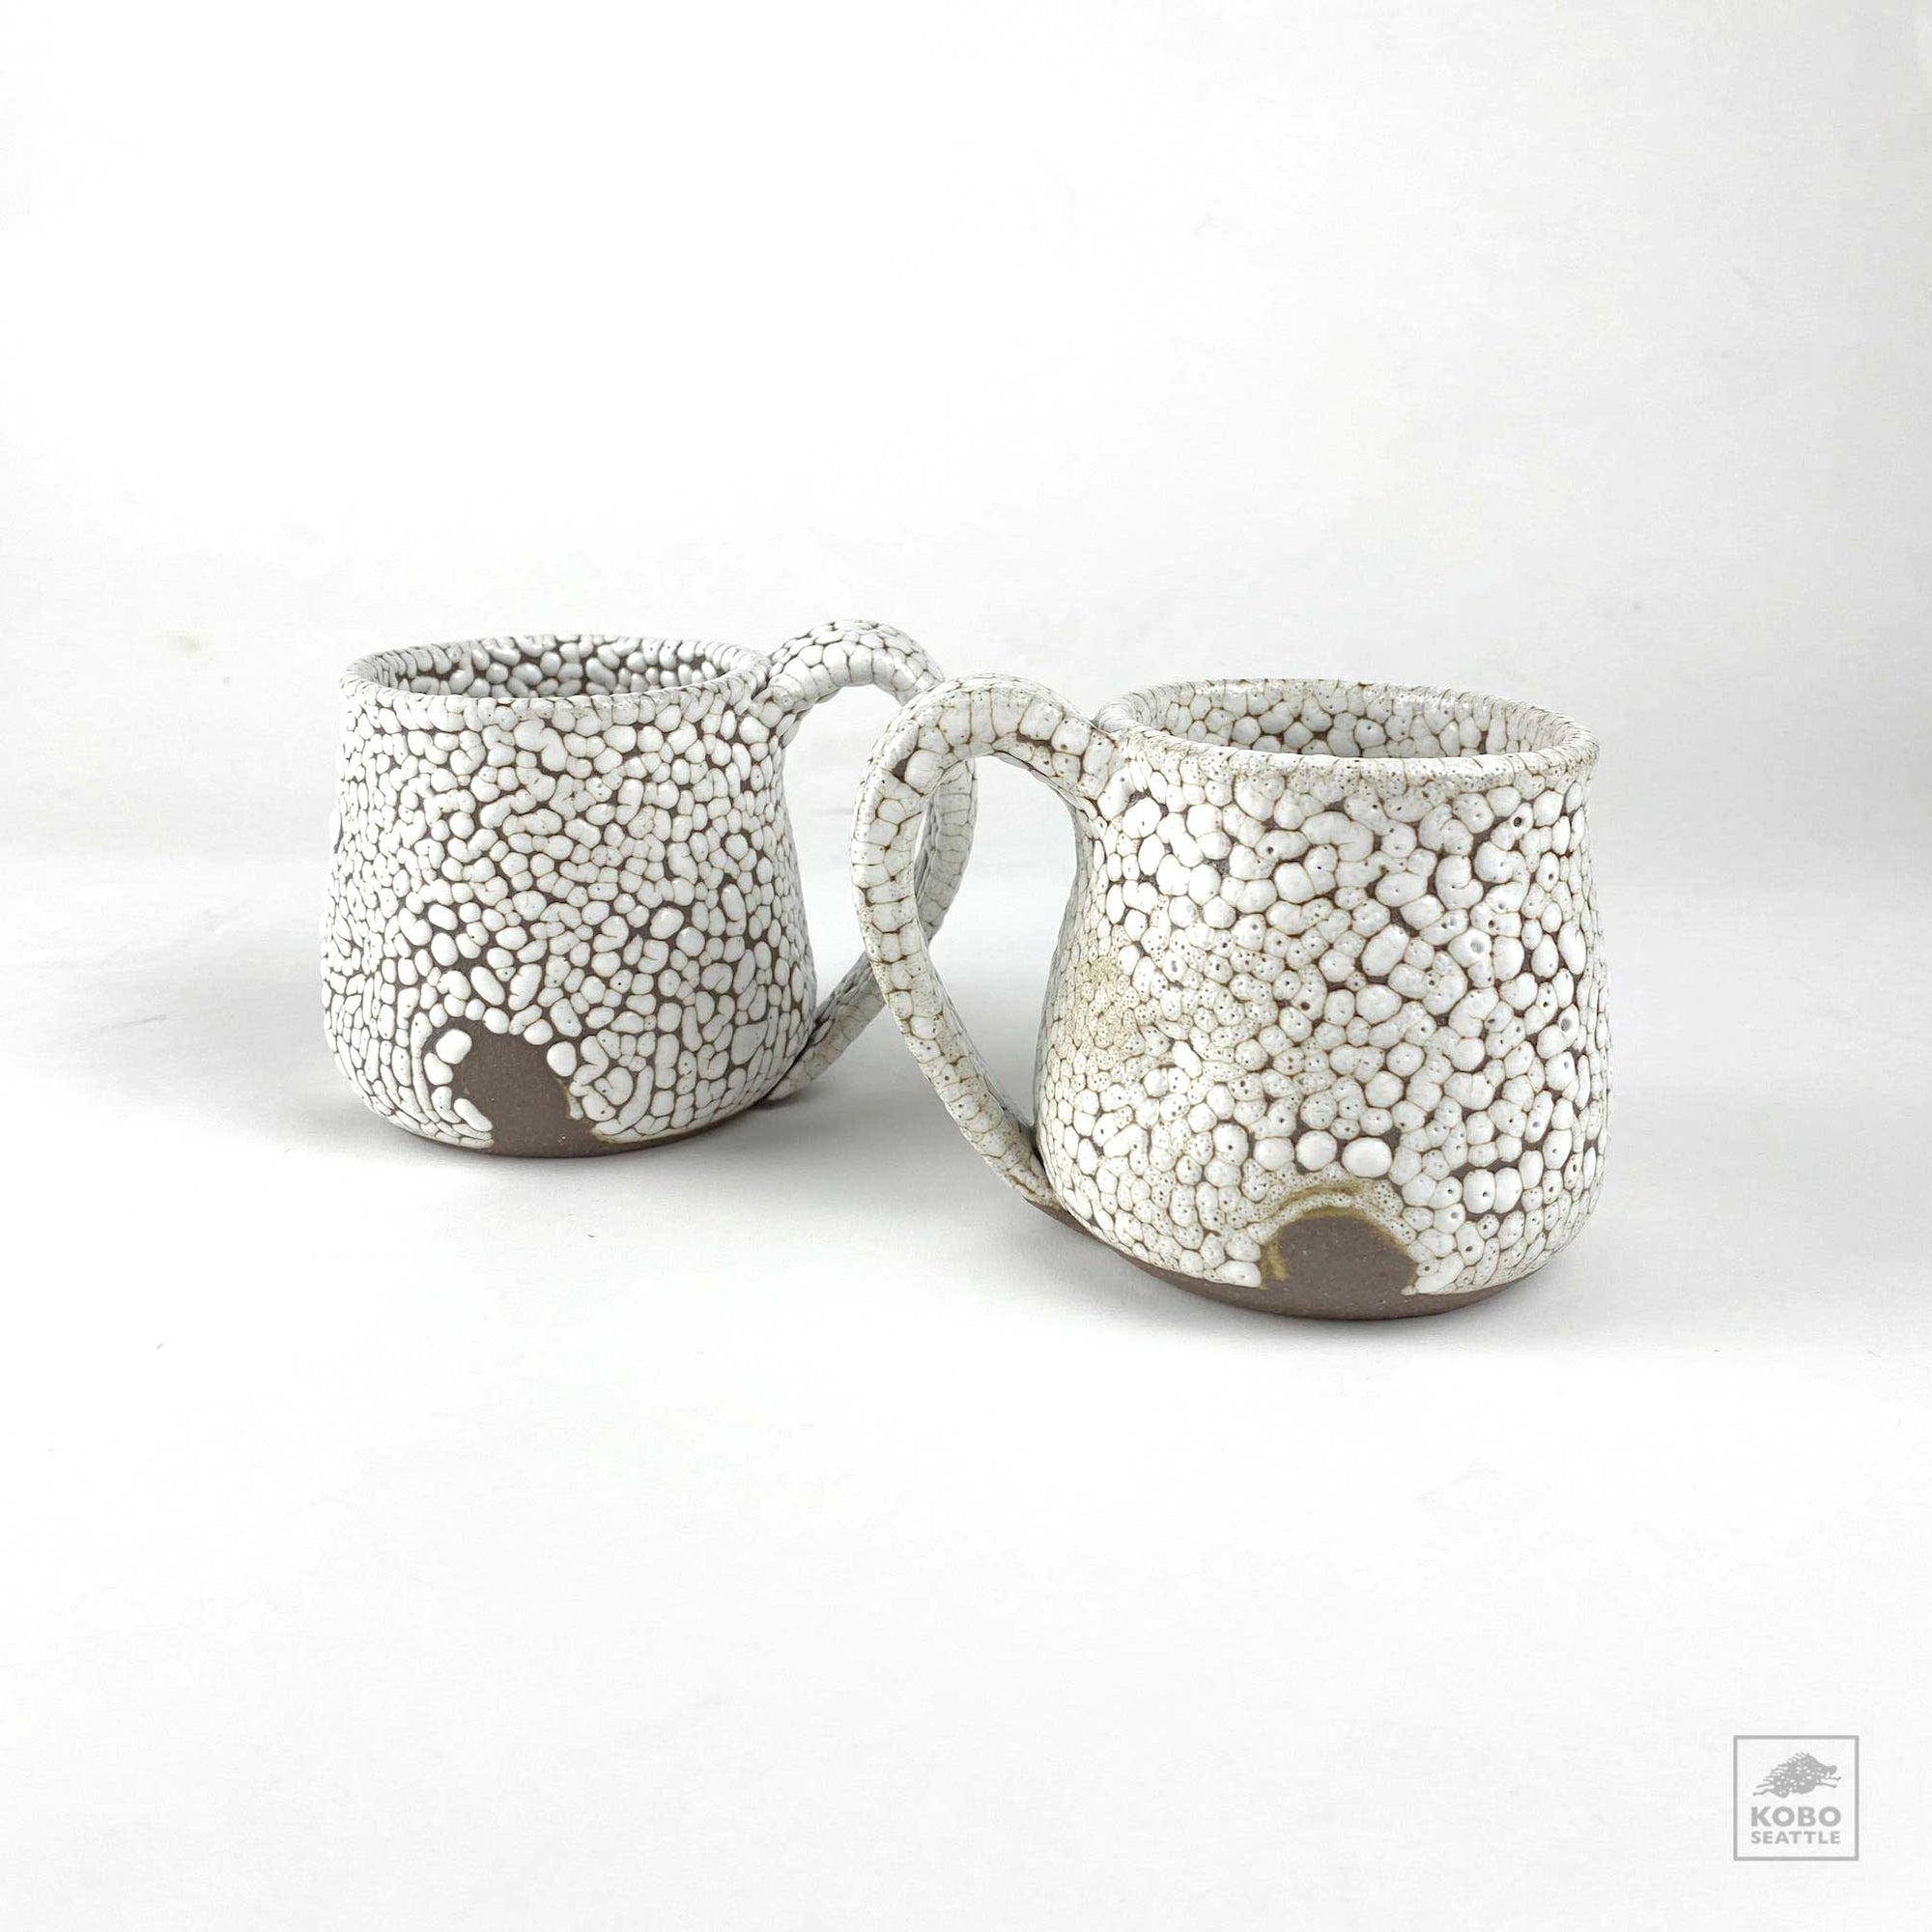 Dark Clay with White Mugs by Brendan Fuller